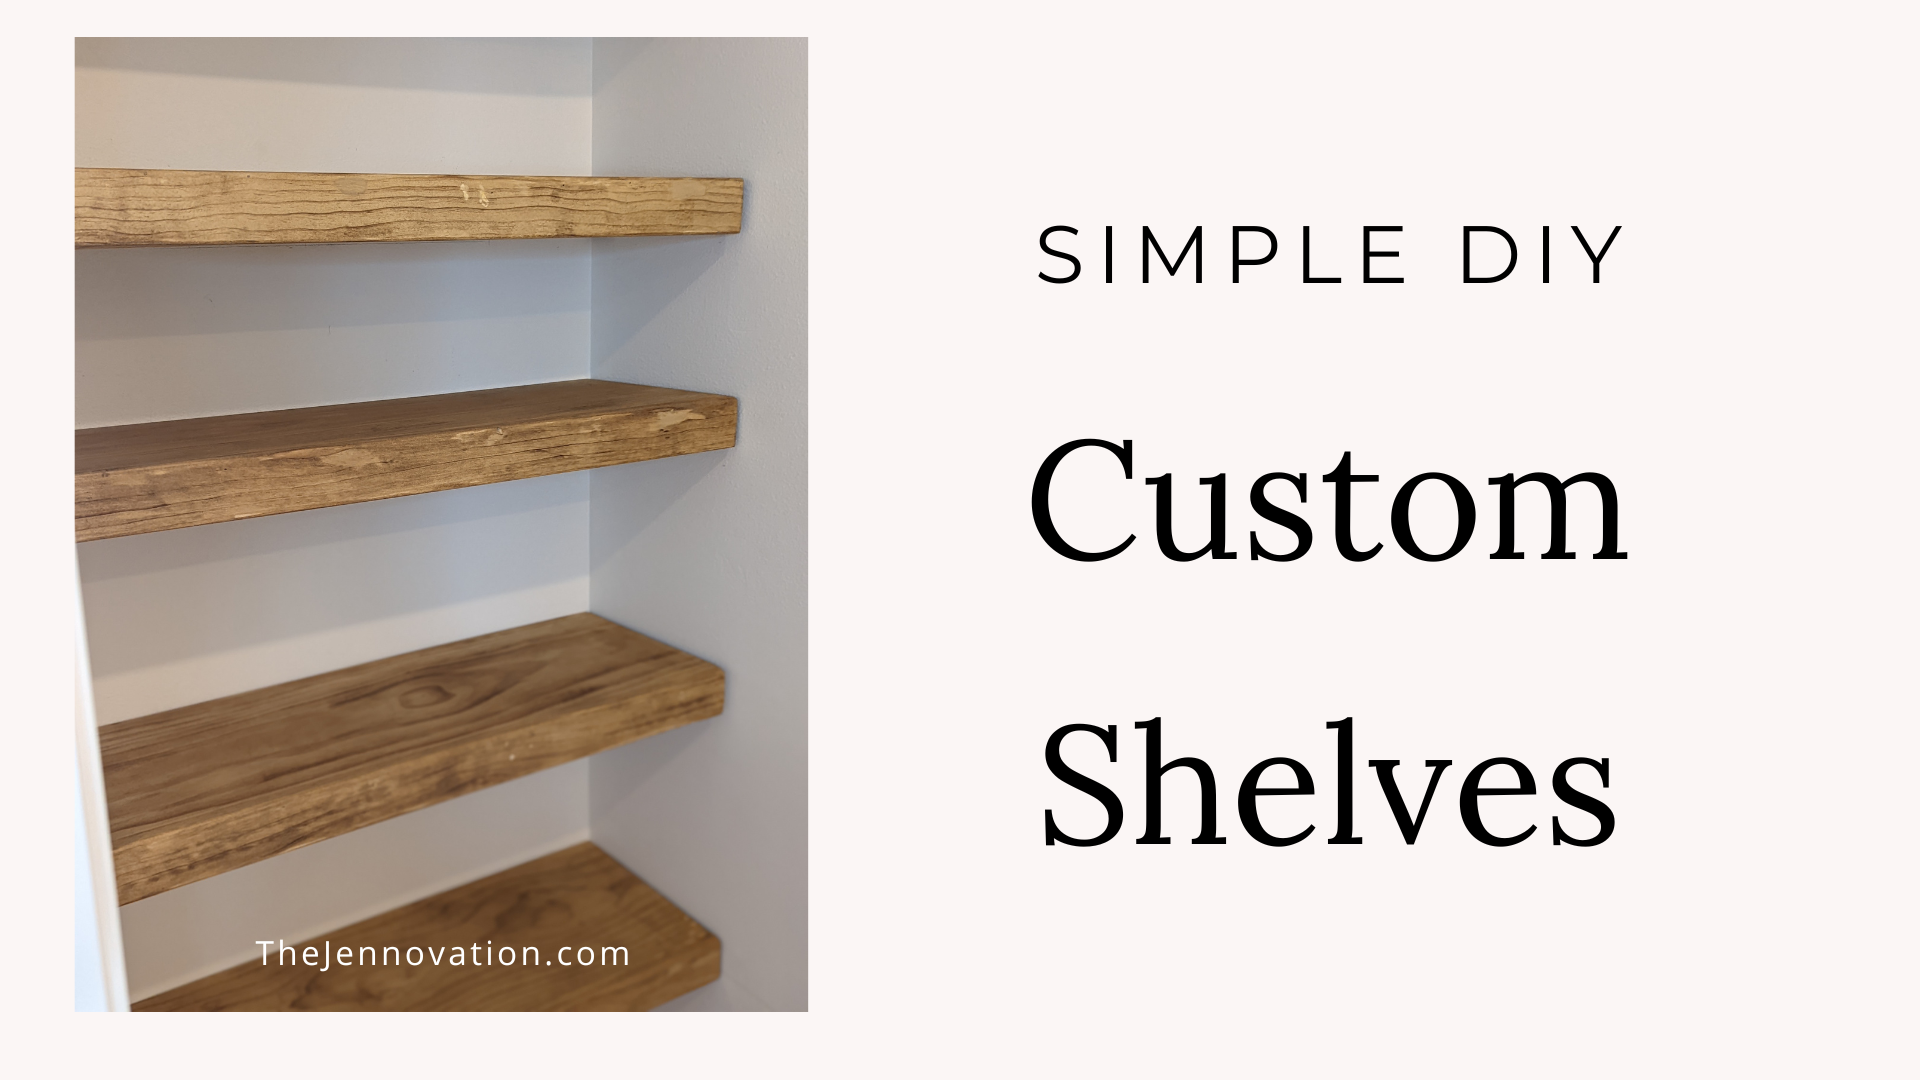 Simple DIY Custom Shelves Header Image